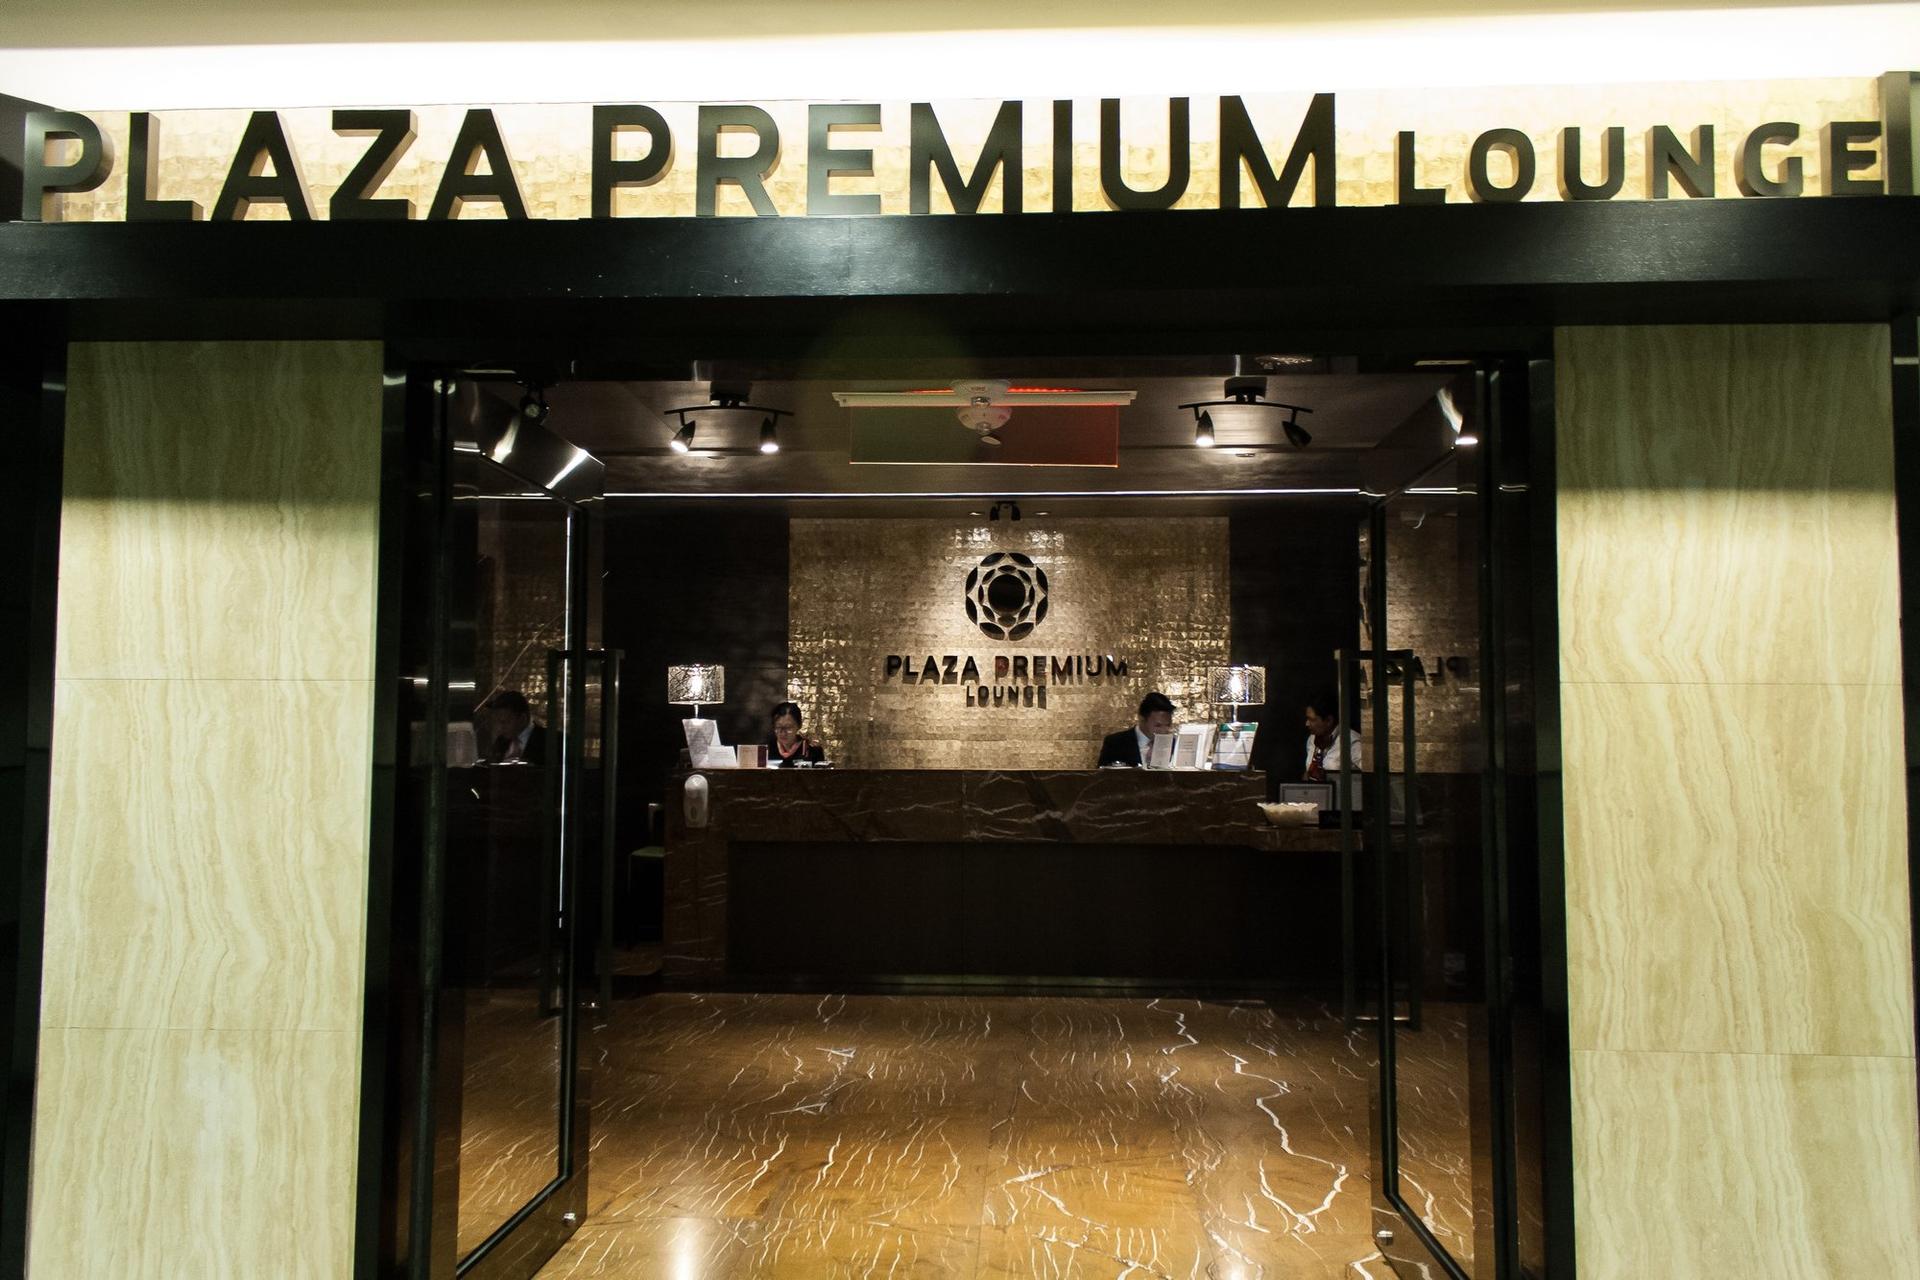 Plaza Premium Lounge image 27 of 48